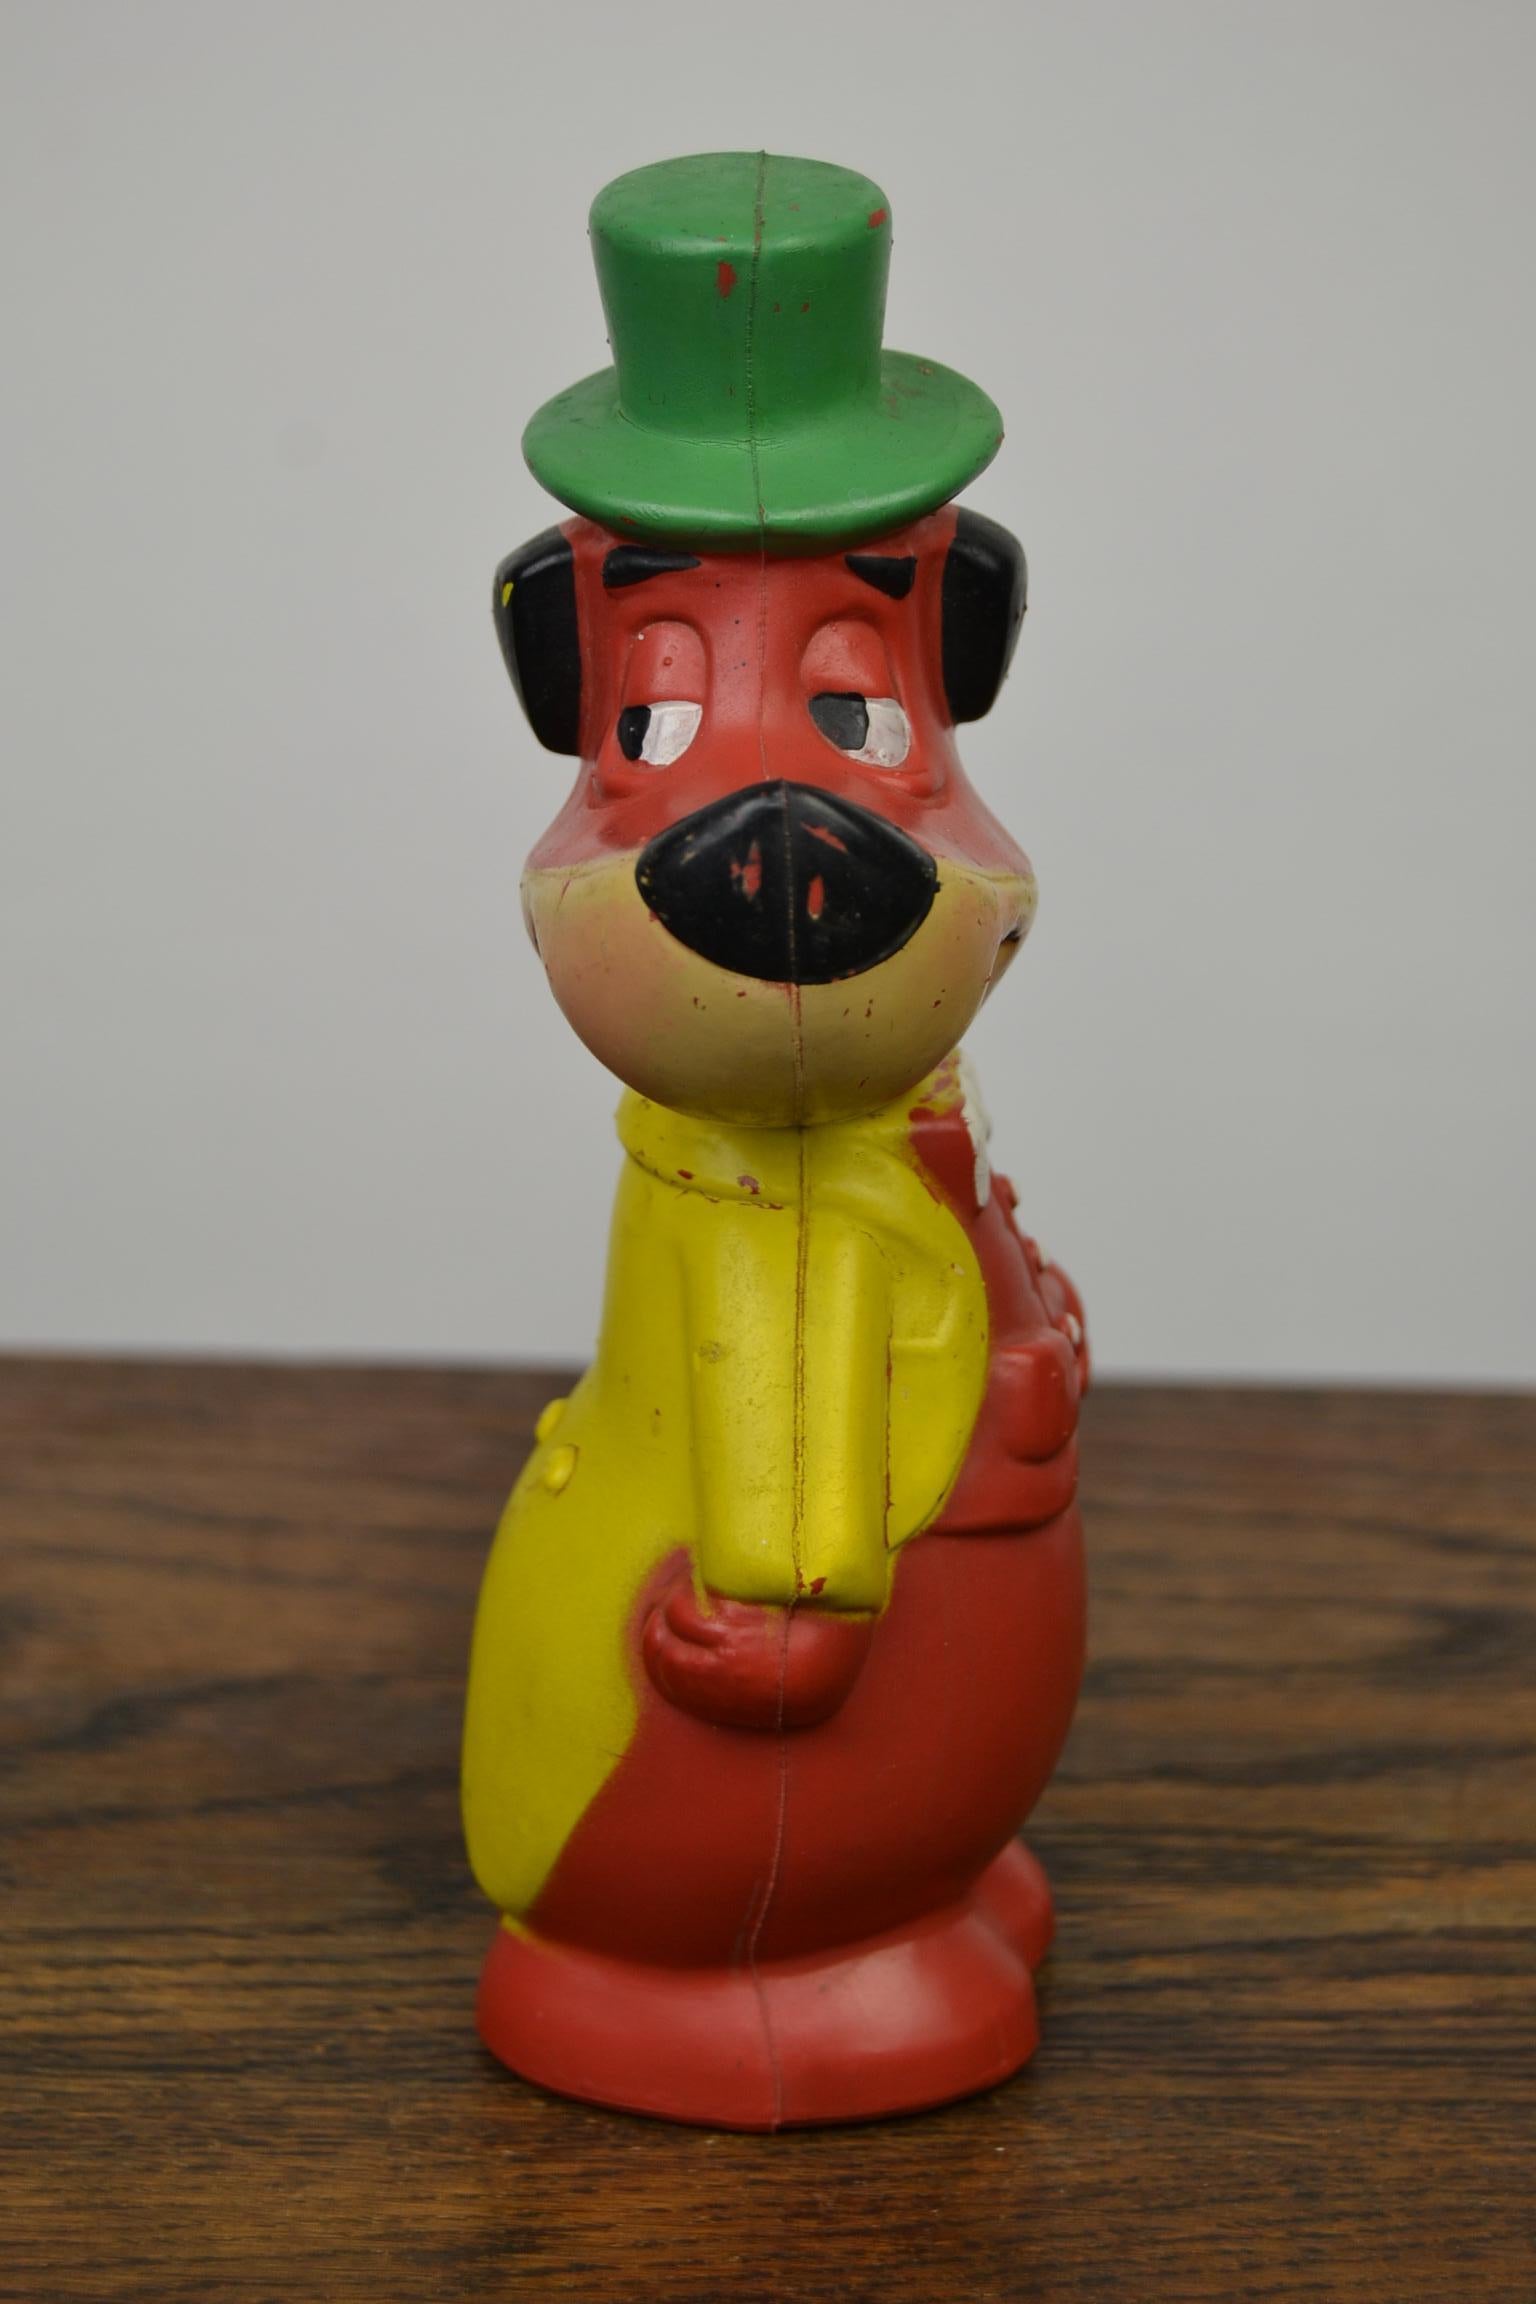 Rubber 1965 Hanna Barbera Huckleberry Hound Figurine by Goebel, W.Germany